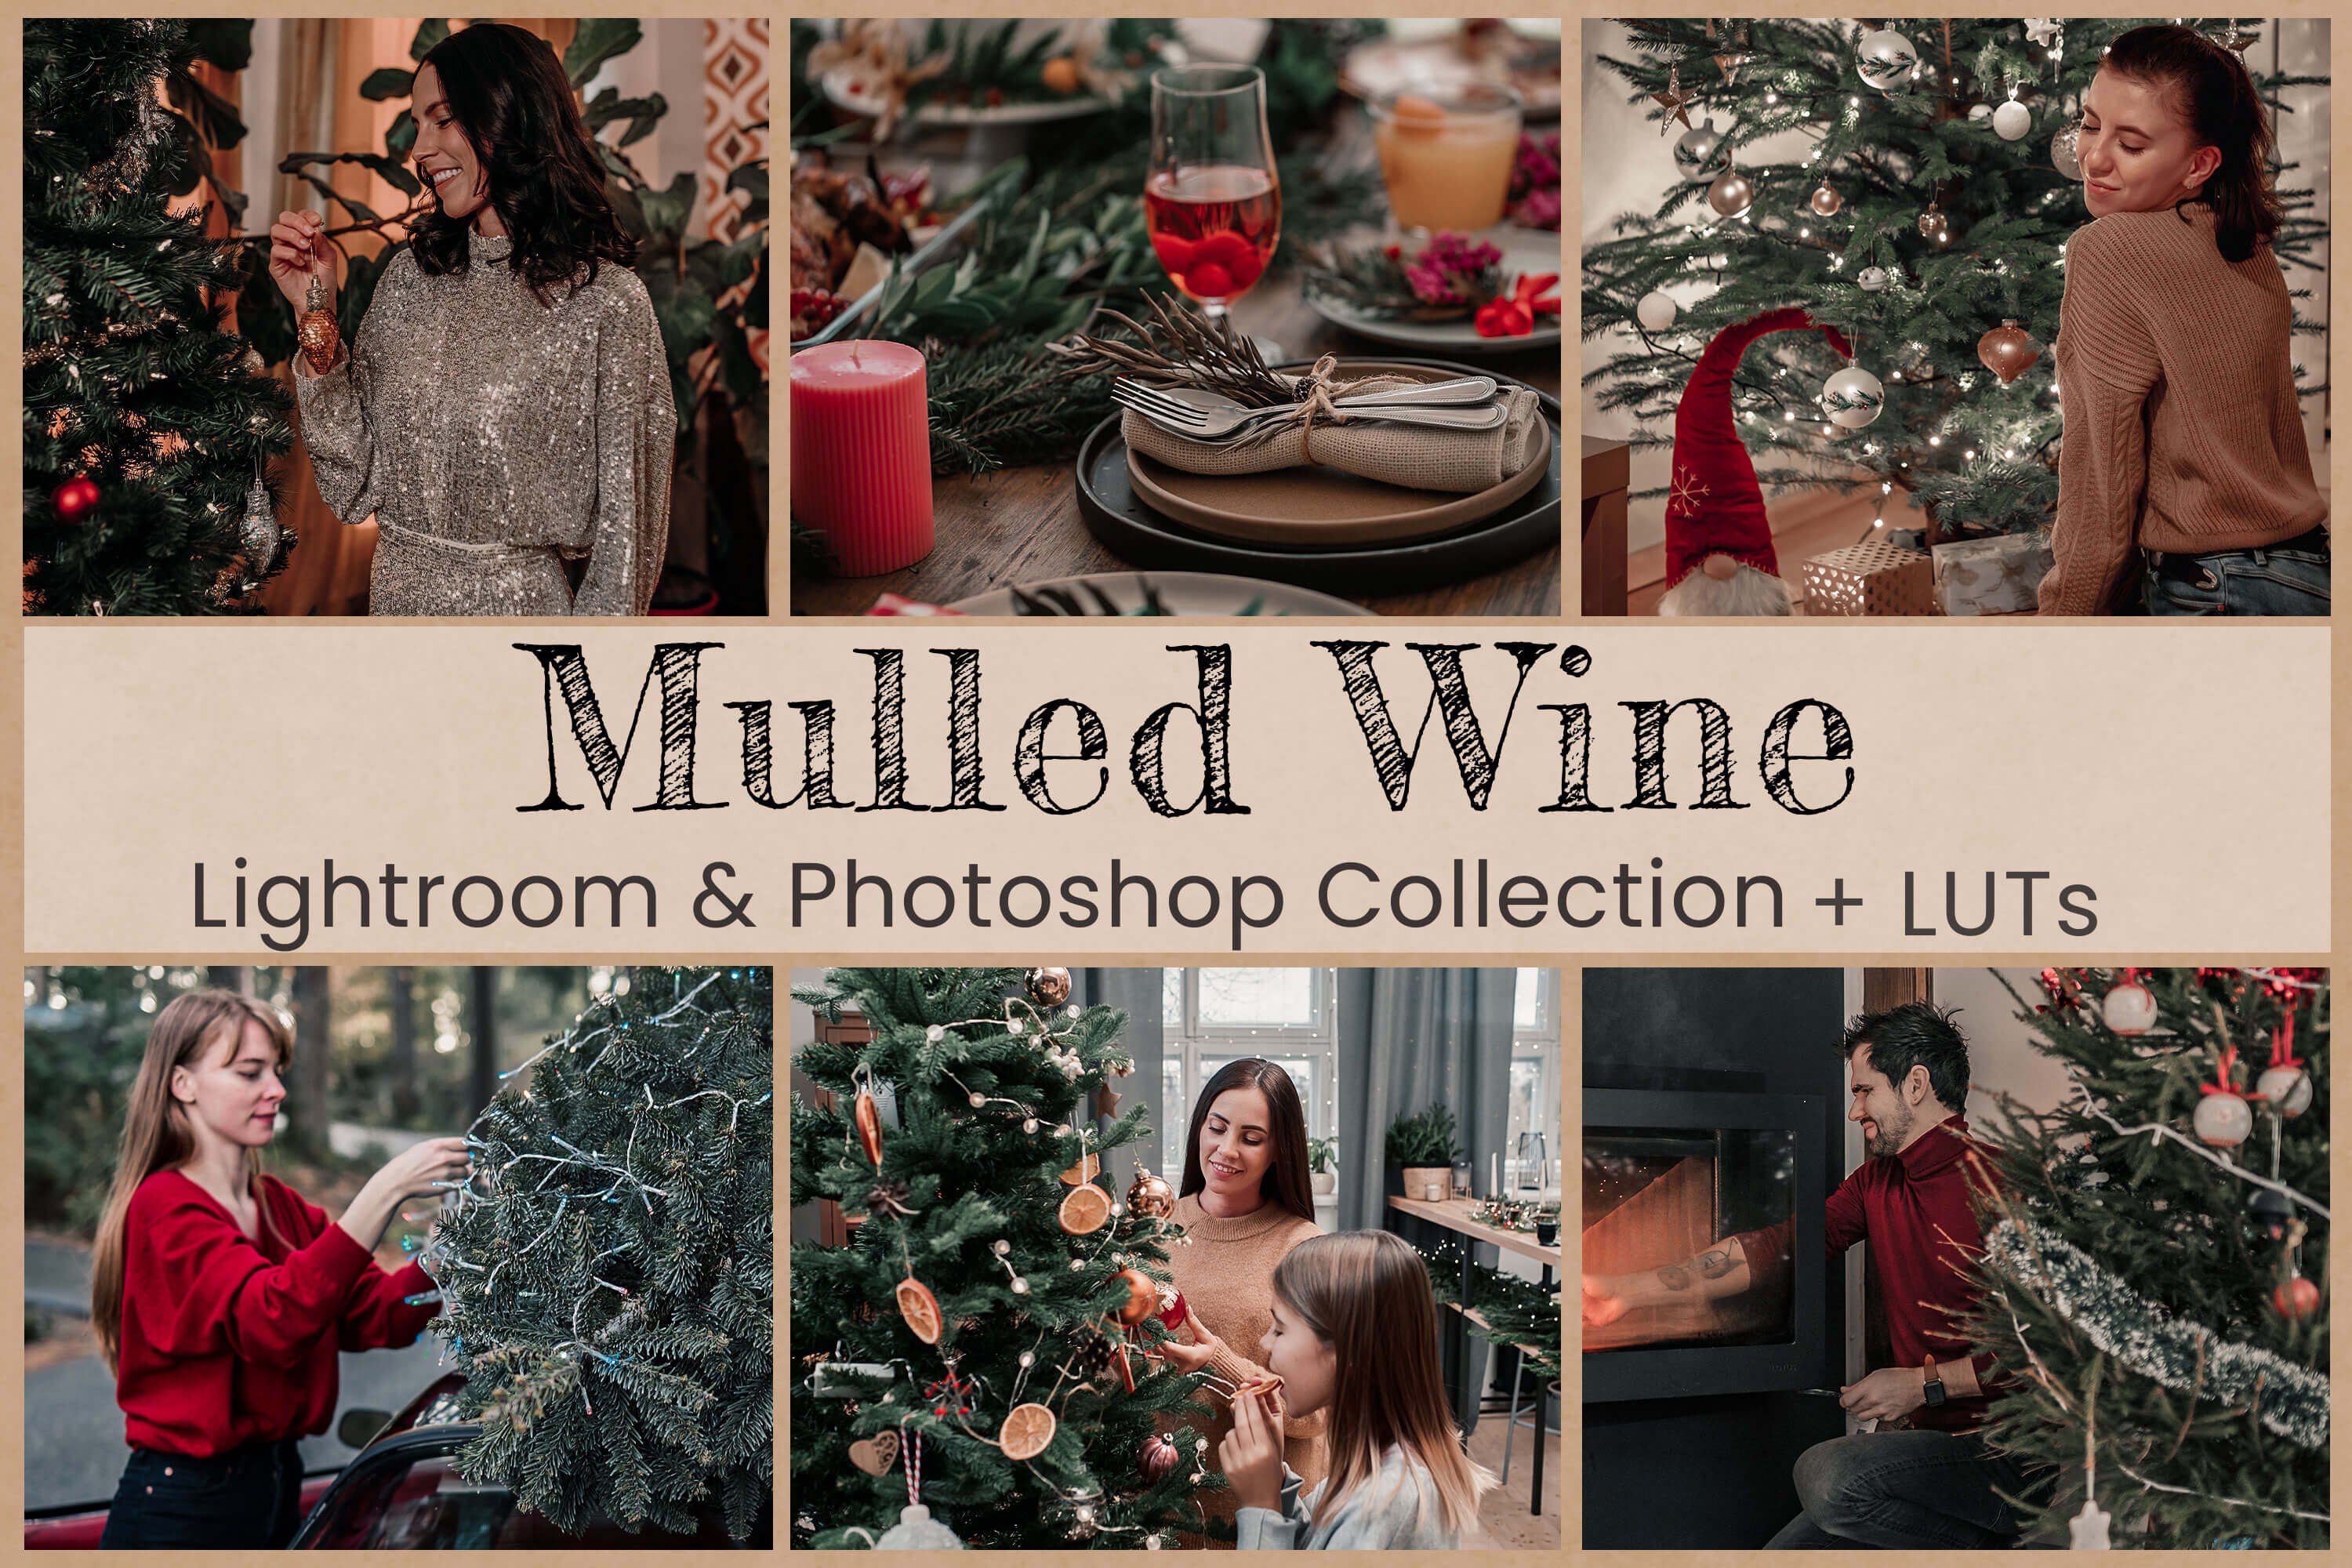 Mulled Wine Lightroom Photoshop LUTscover image.